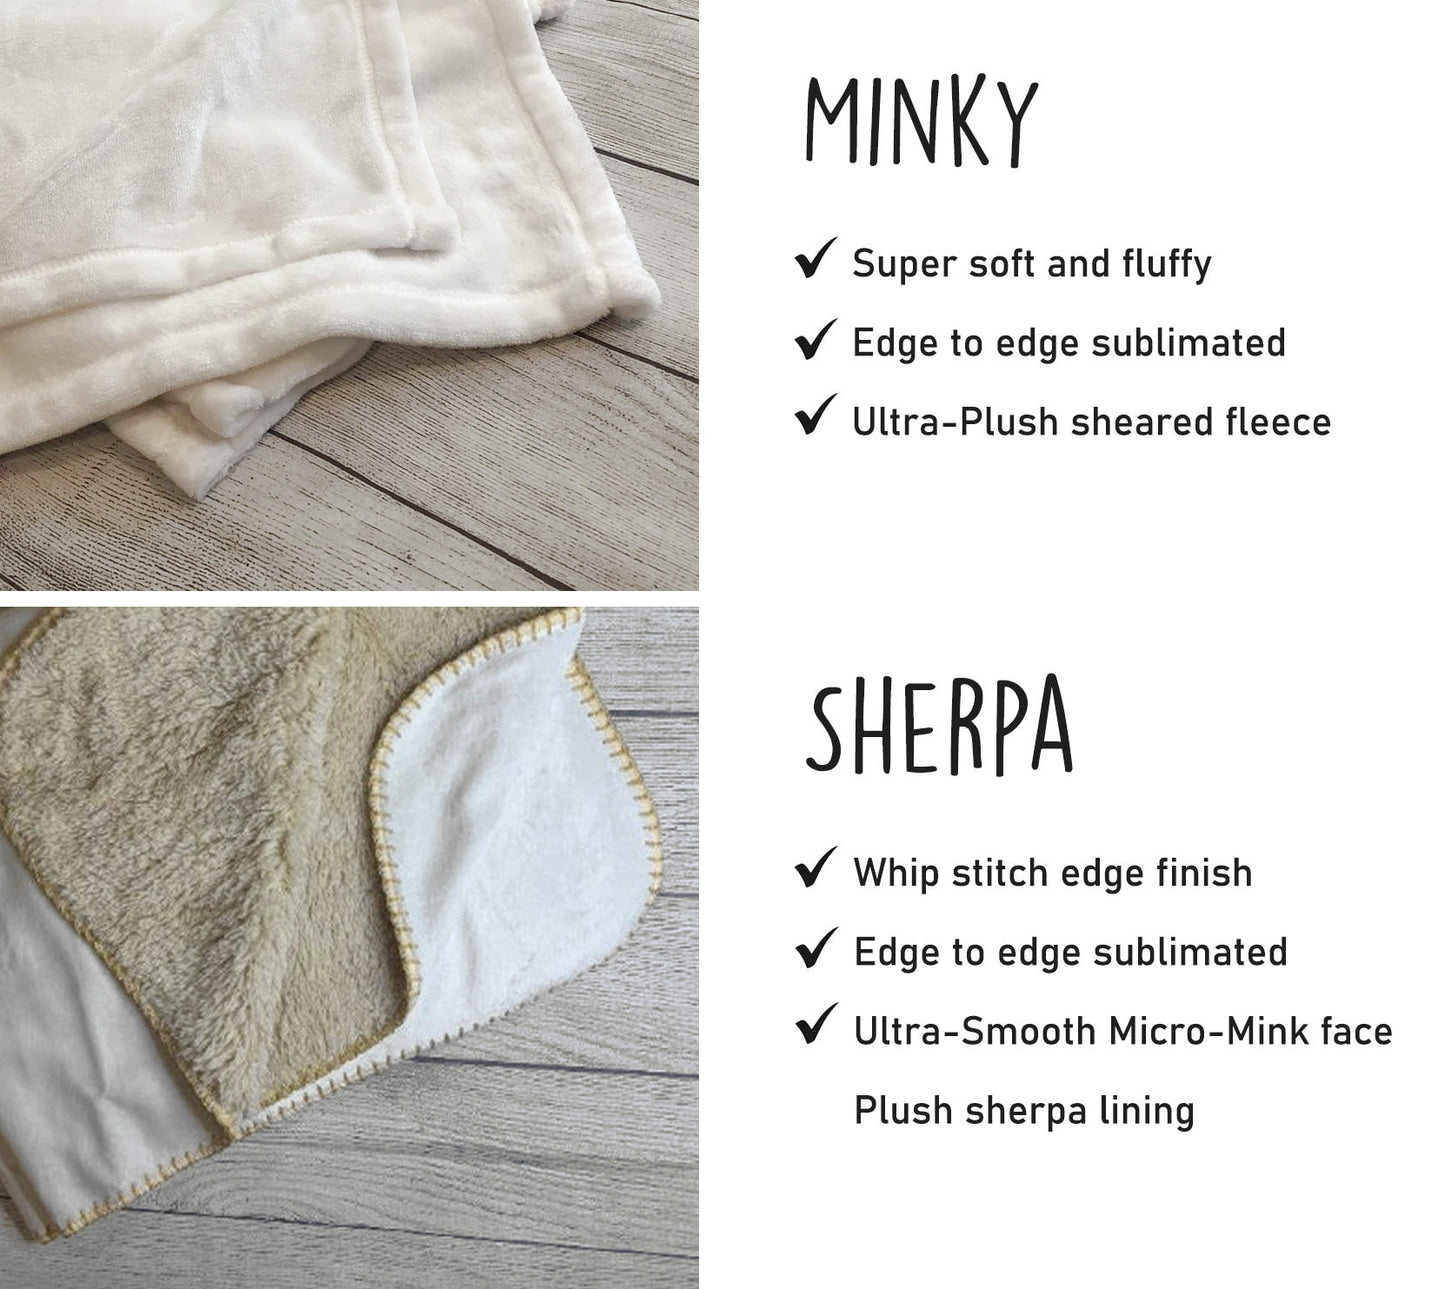 Retro Rainbow personalize blanket with custom name, Minky or Sherpa custom blanket, Baby blanket, birthday gift idea